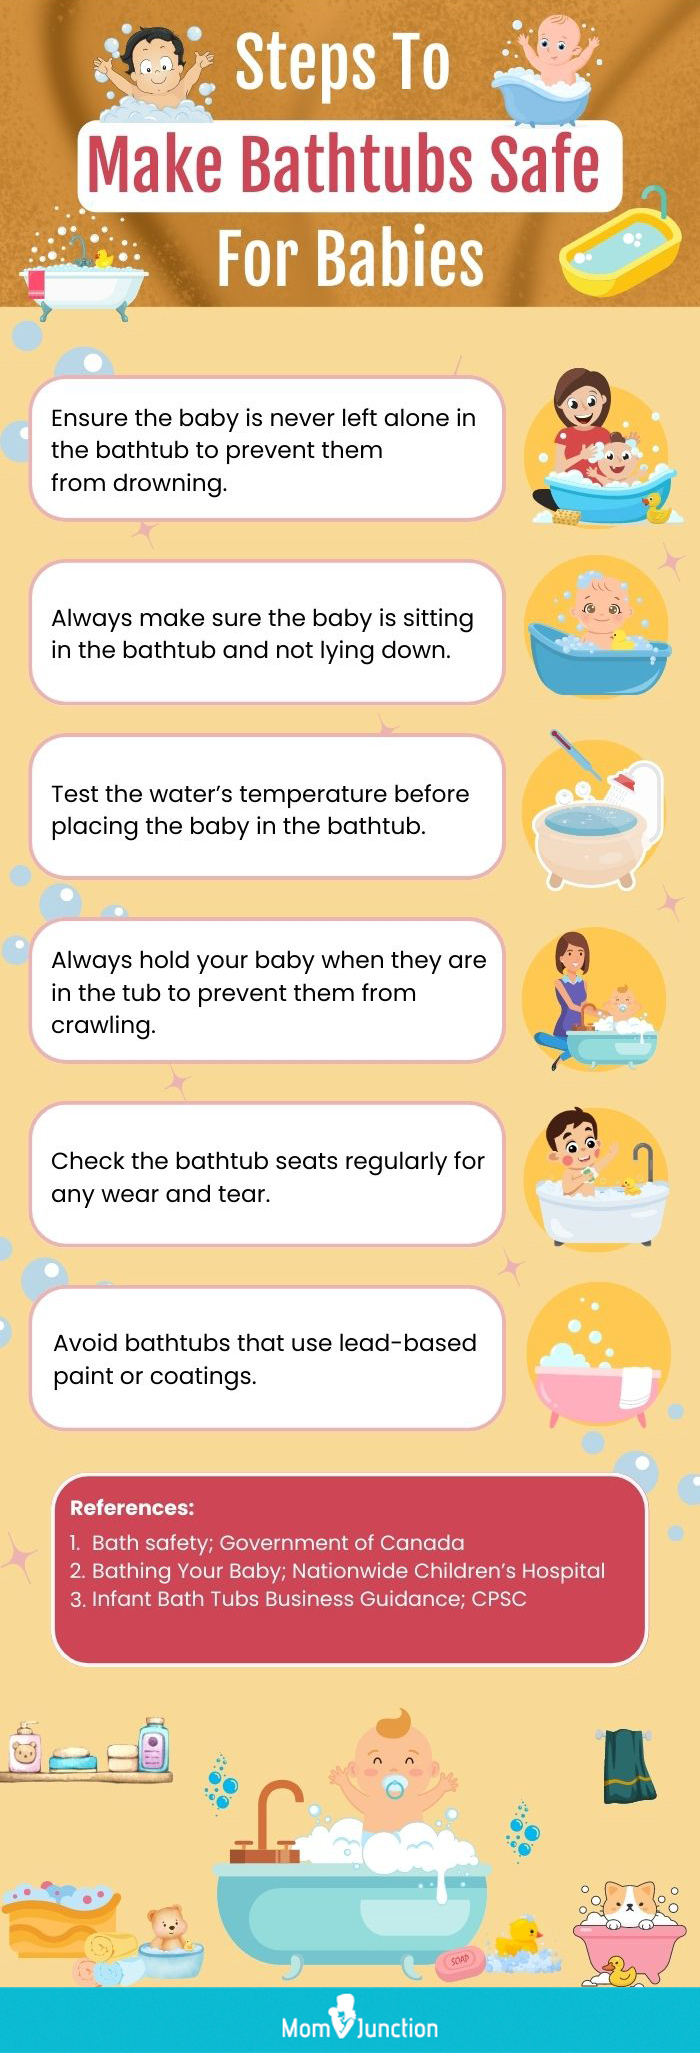 Steps To Make Bathtubs Safe For Babies (Infographic)